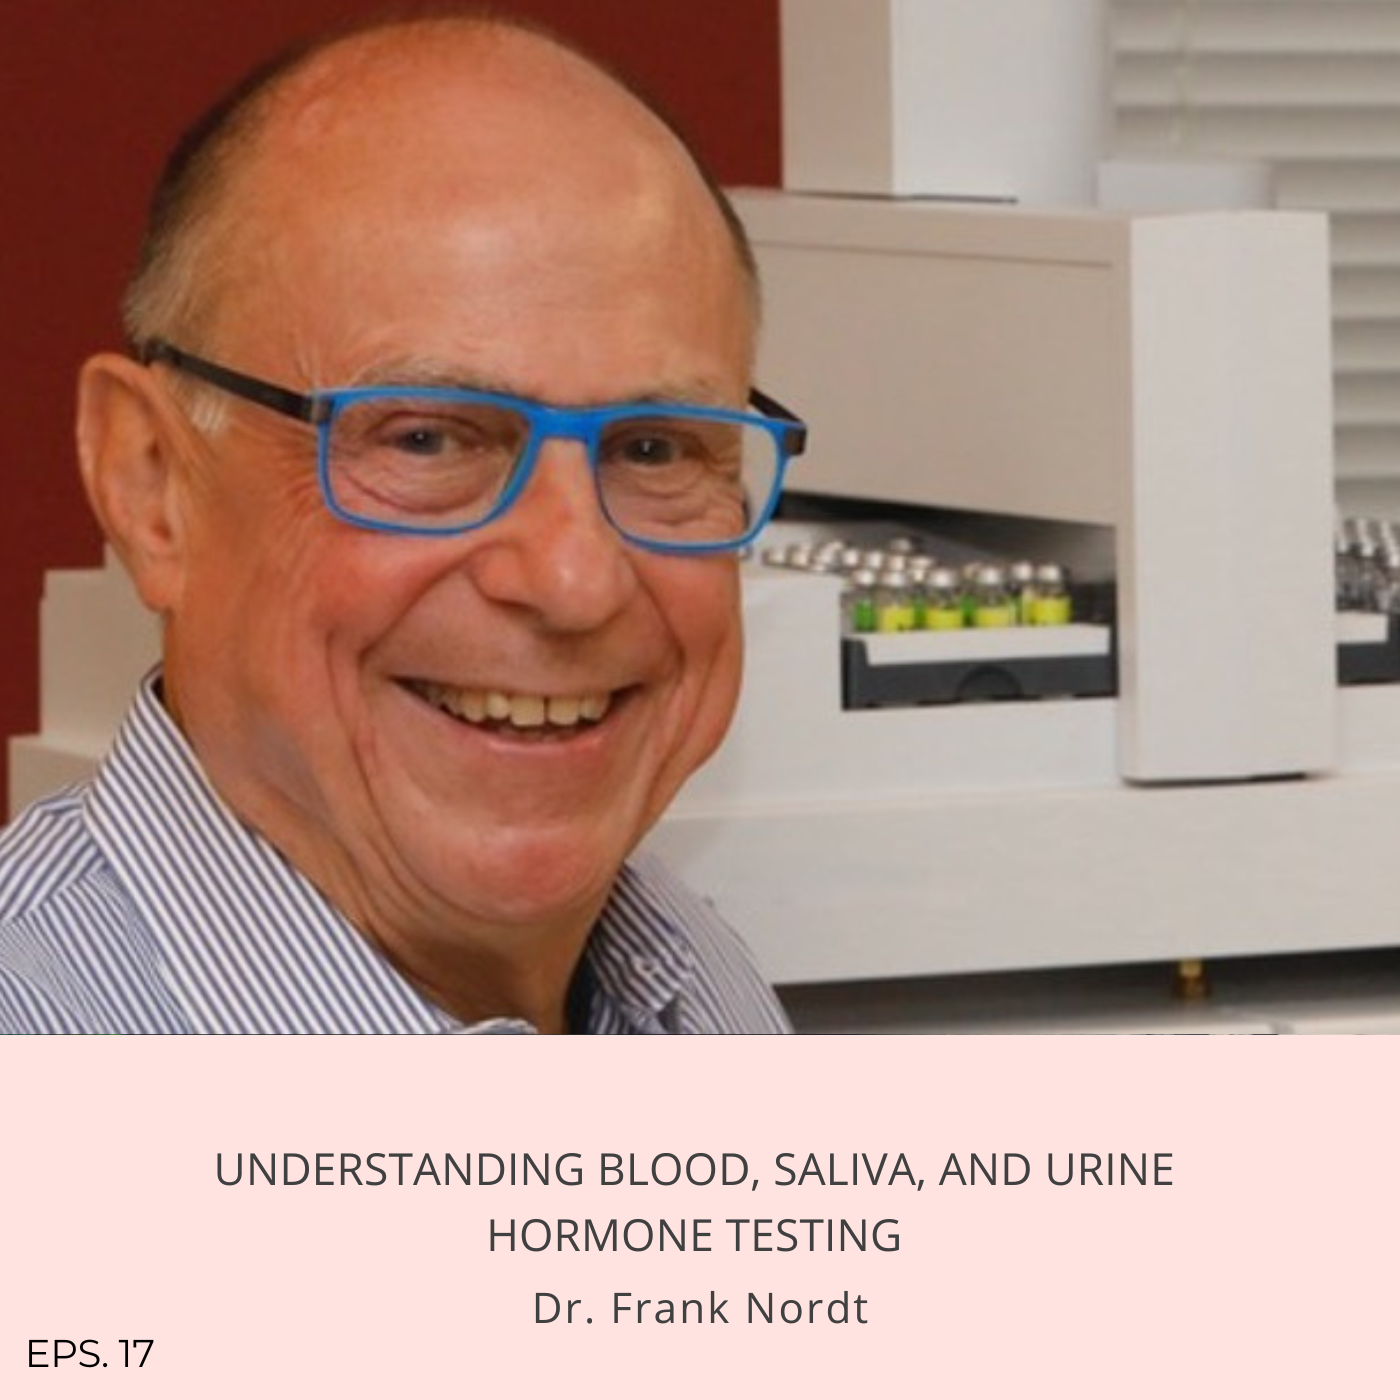 Episode 17: Understanding blood, saliva, and urine hormone testing with Dr. Frank Nordt